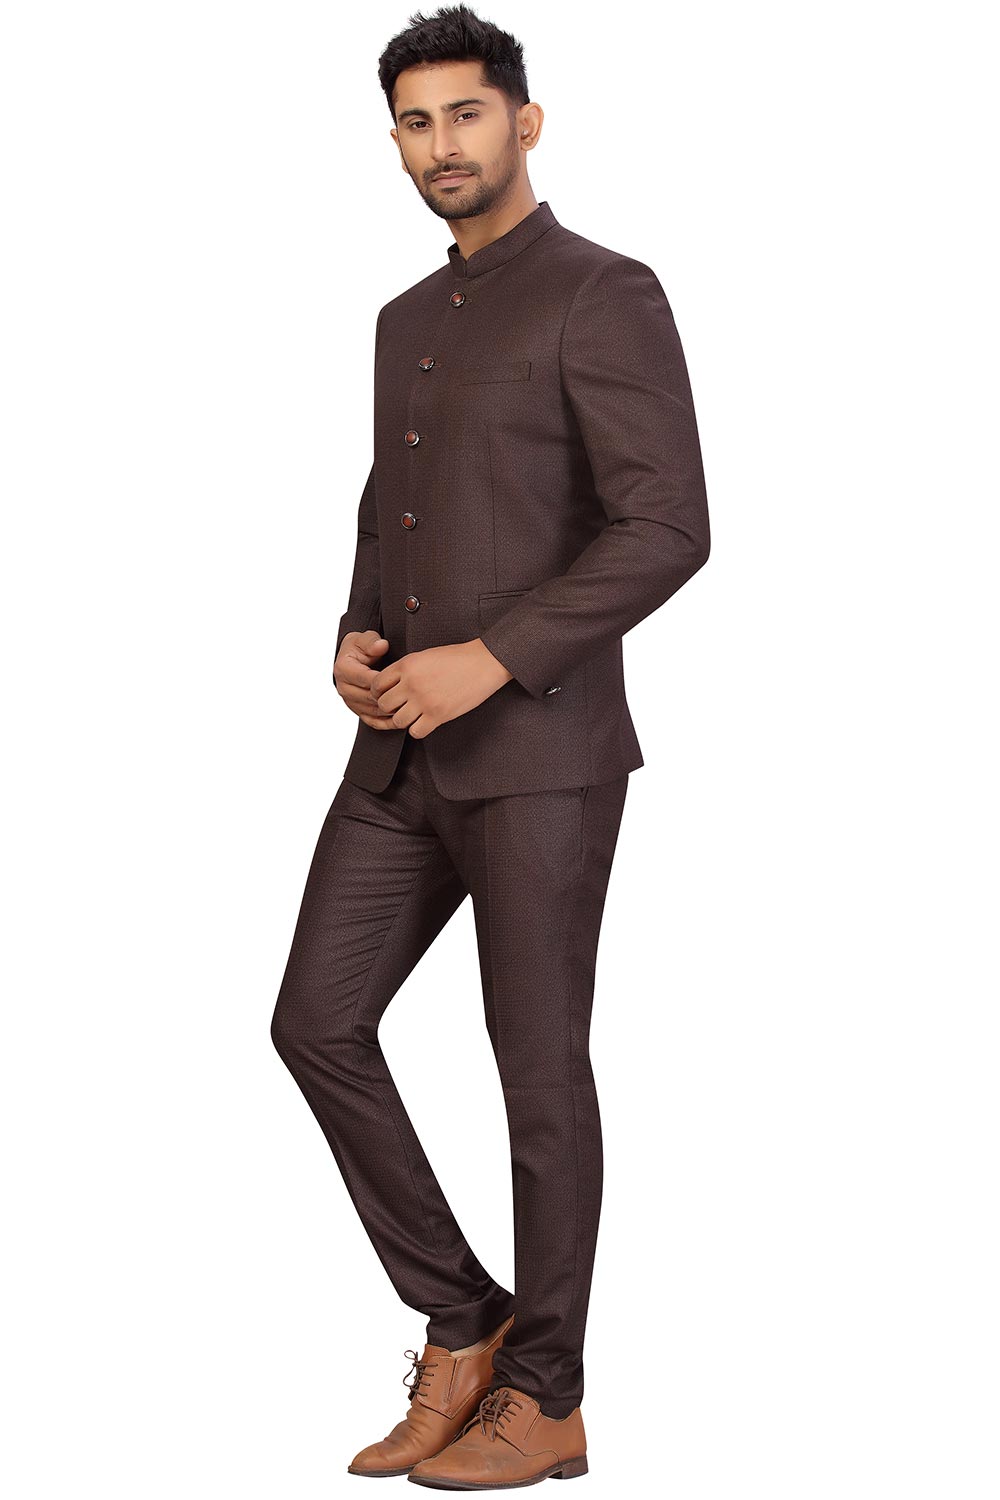 Buy Men's Suiting Fabric Solid Jodhpuri Set in Wine Online - Side